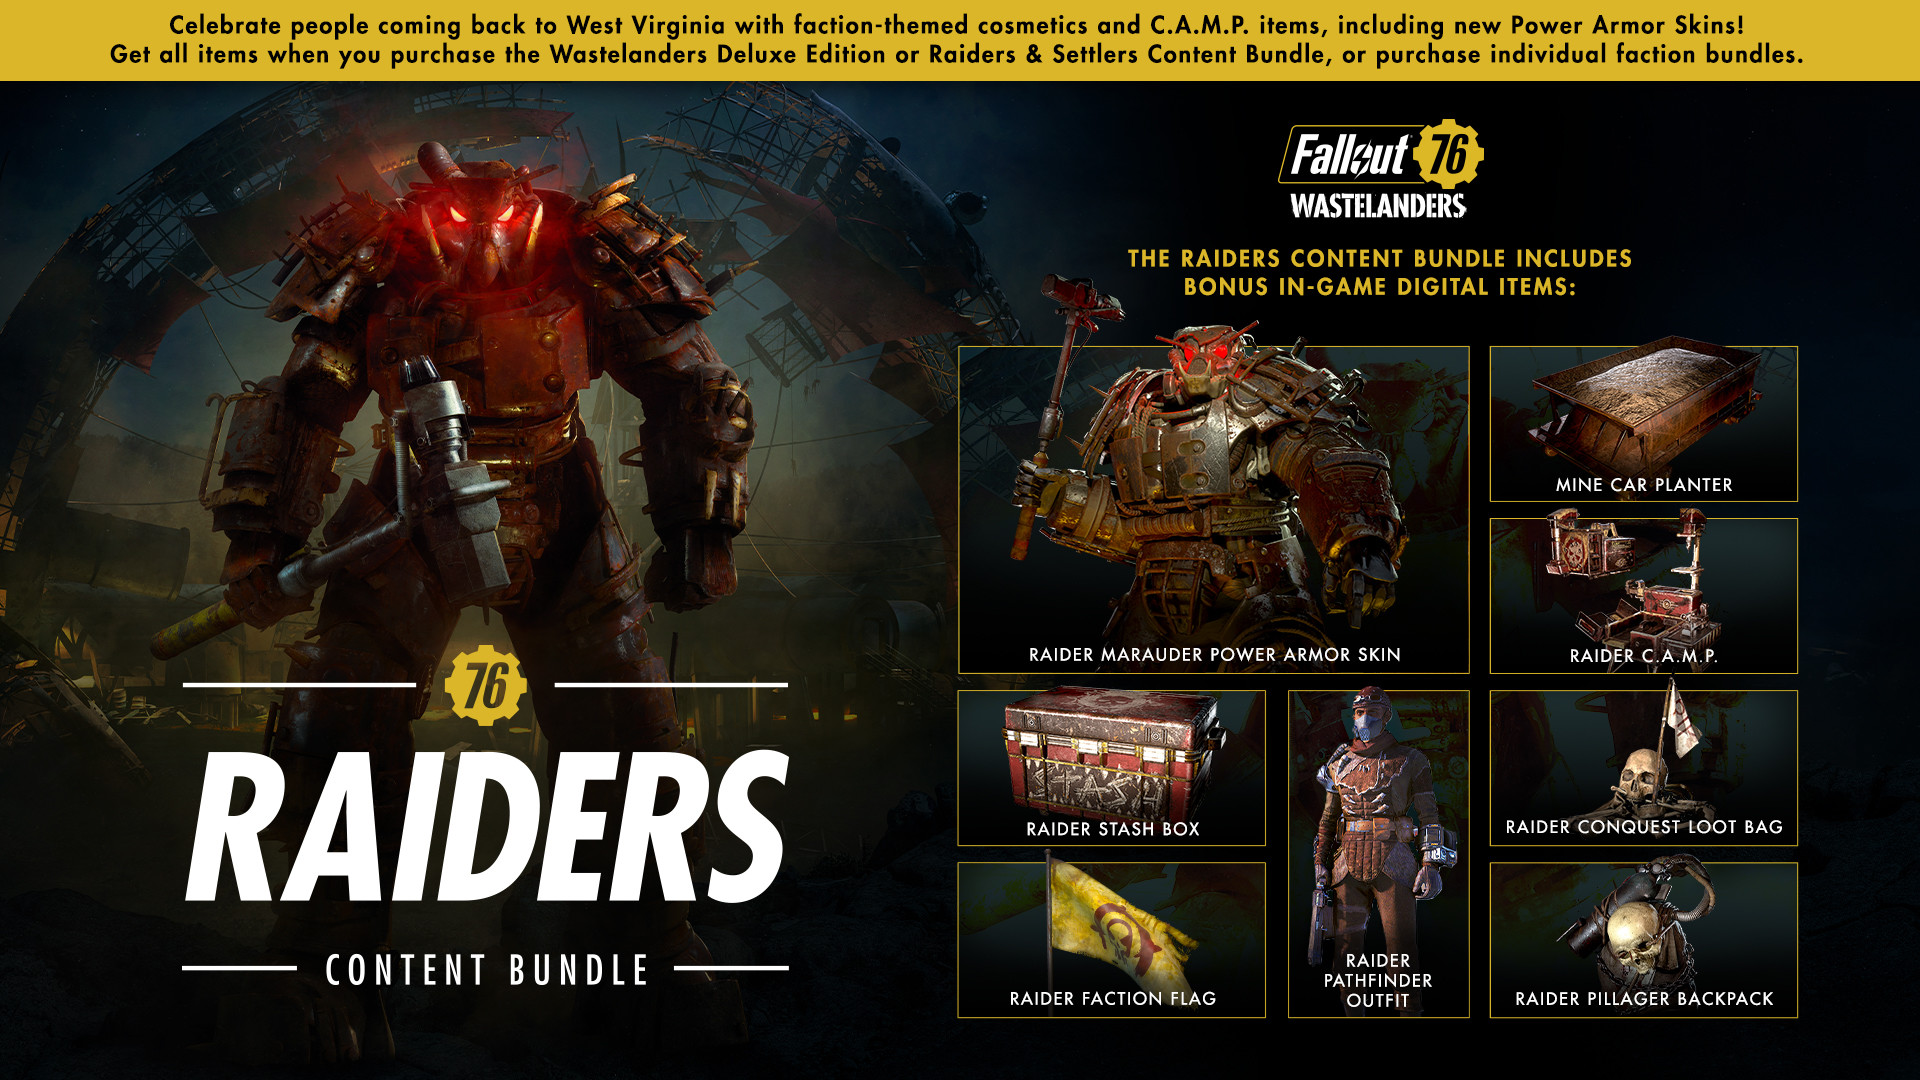 Fallout 76: Raiders Content Bundle Featured Screenshot #1